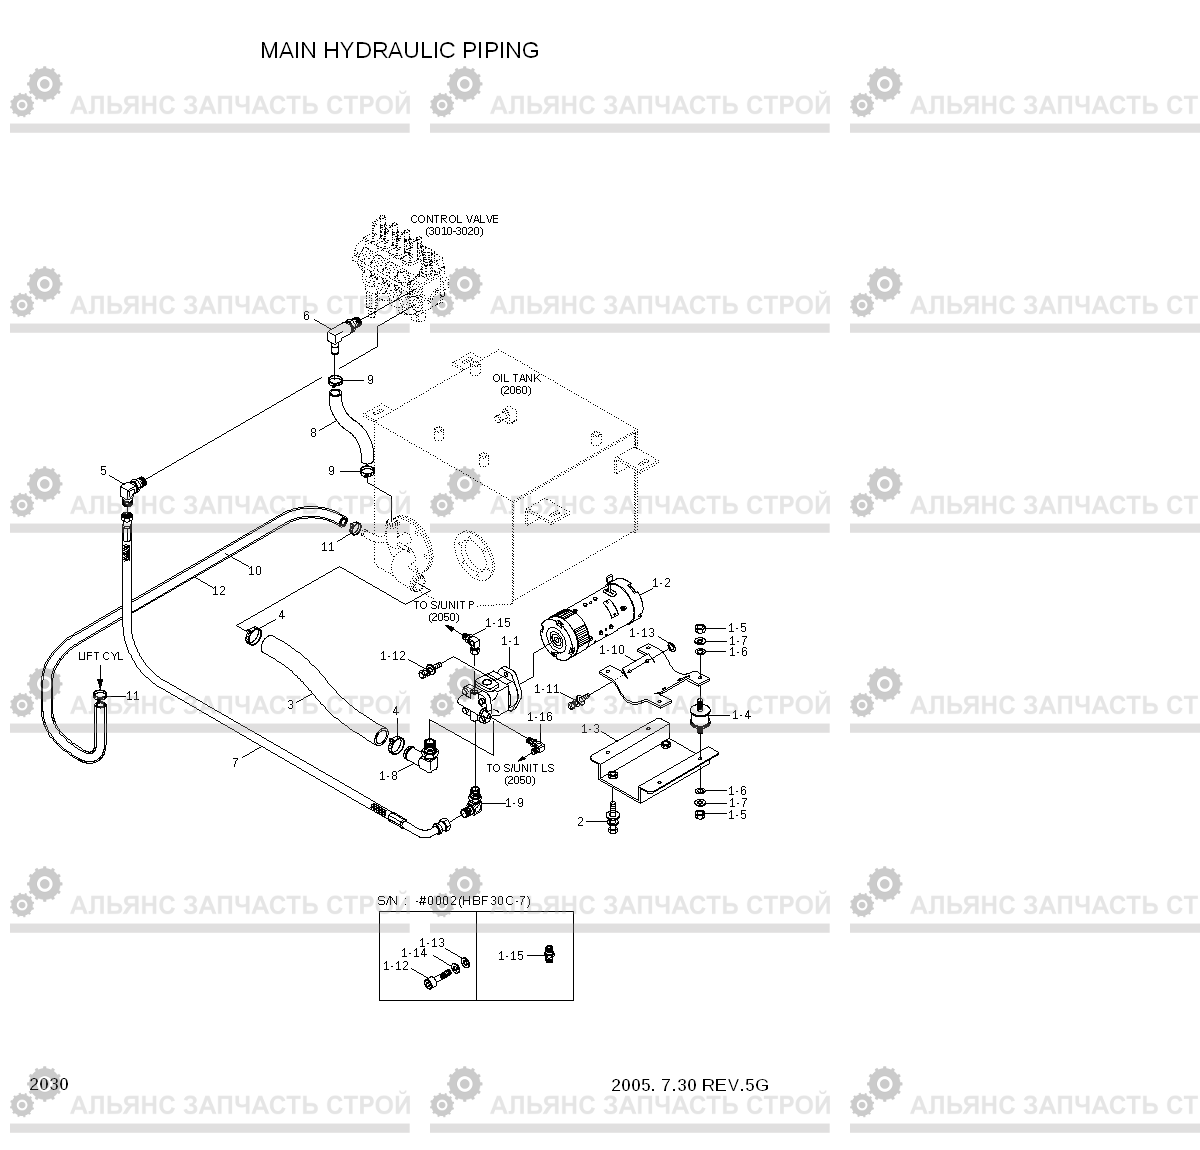 2030 MAIN HYDRAULIC PIPING HBF20/25/30C-7, Hyundai